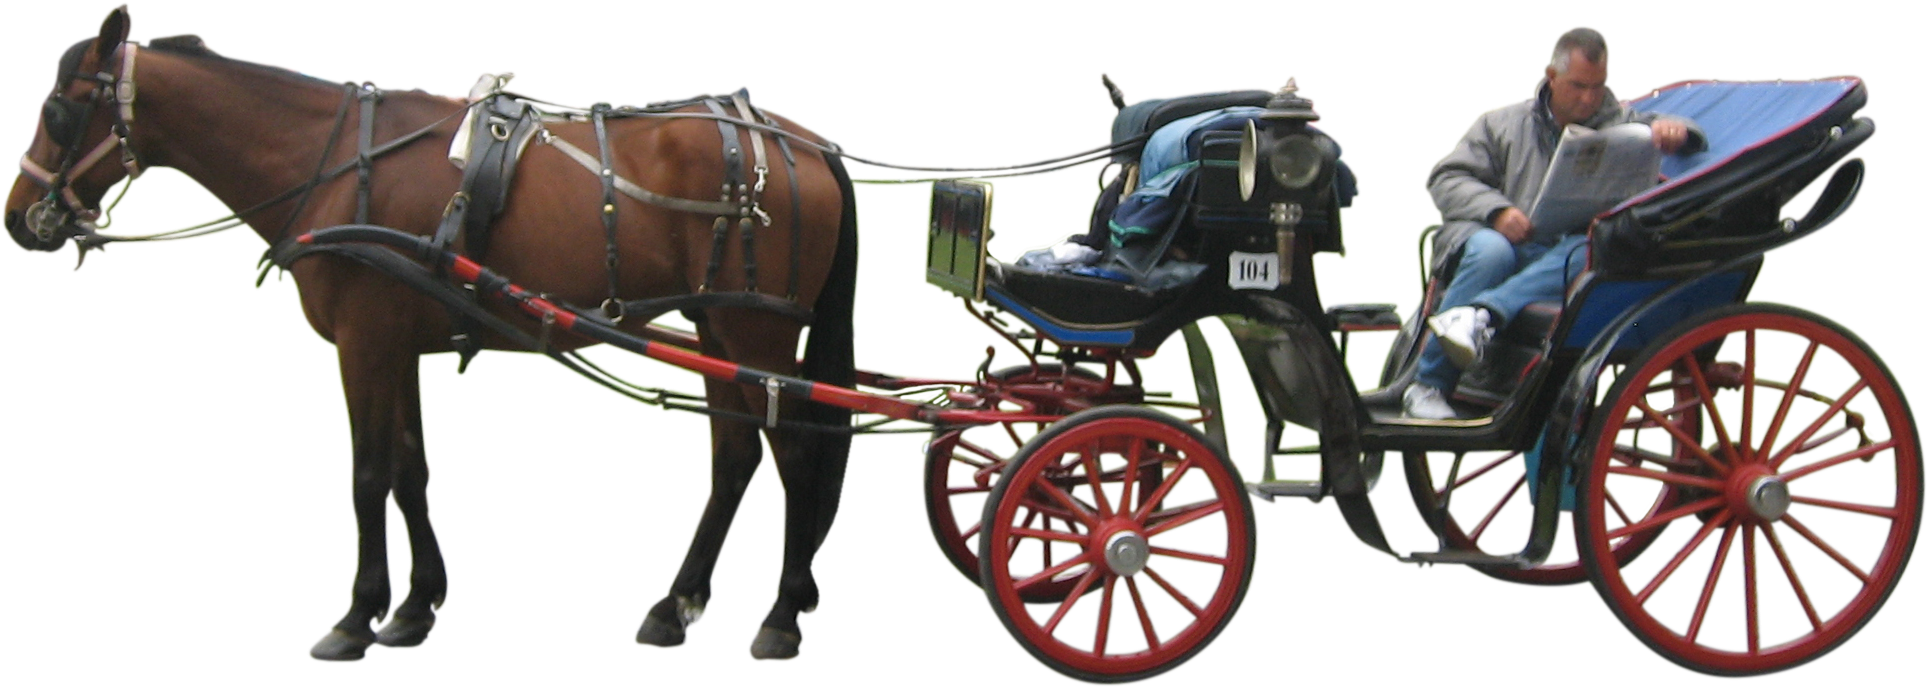 Скачать - Horse Drawn Carriage Png (1926x1926)